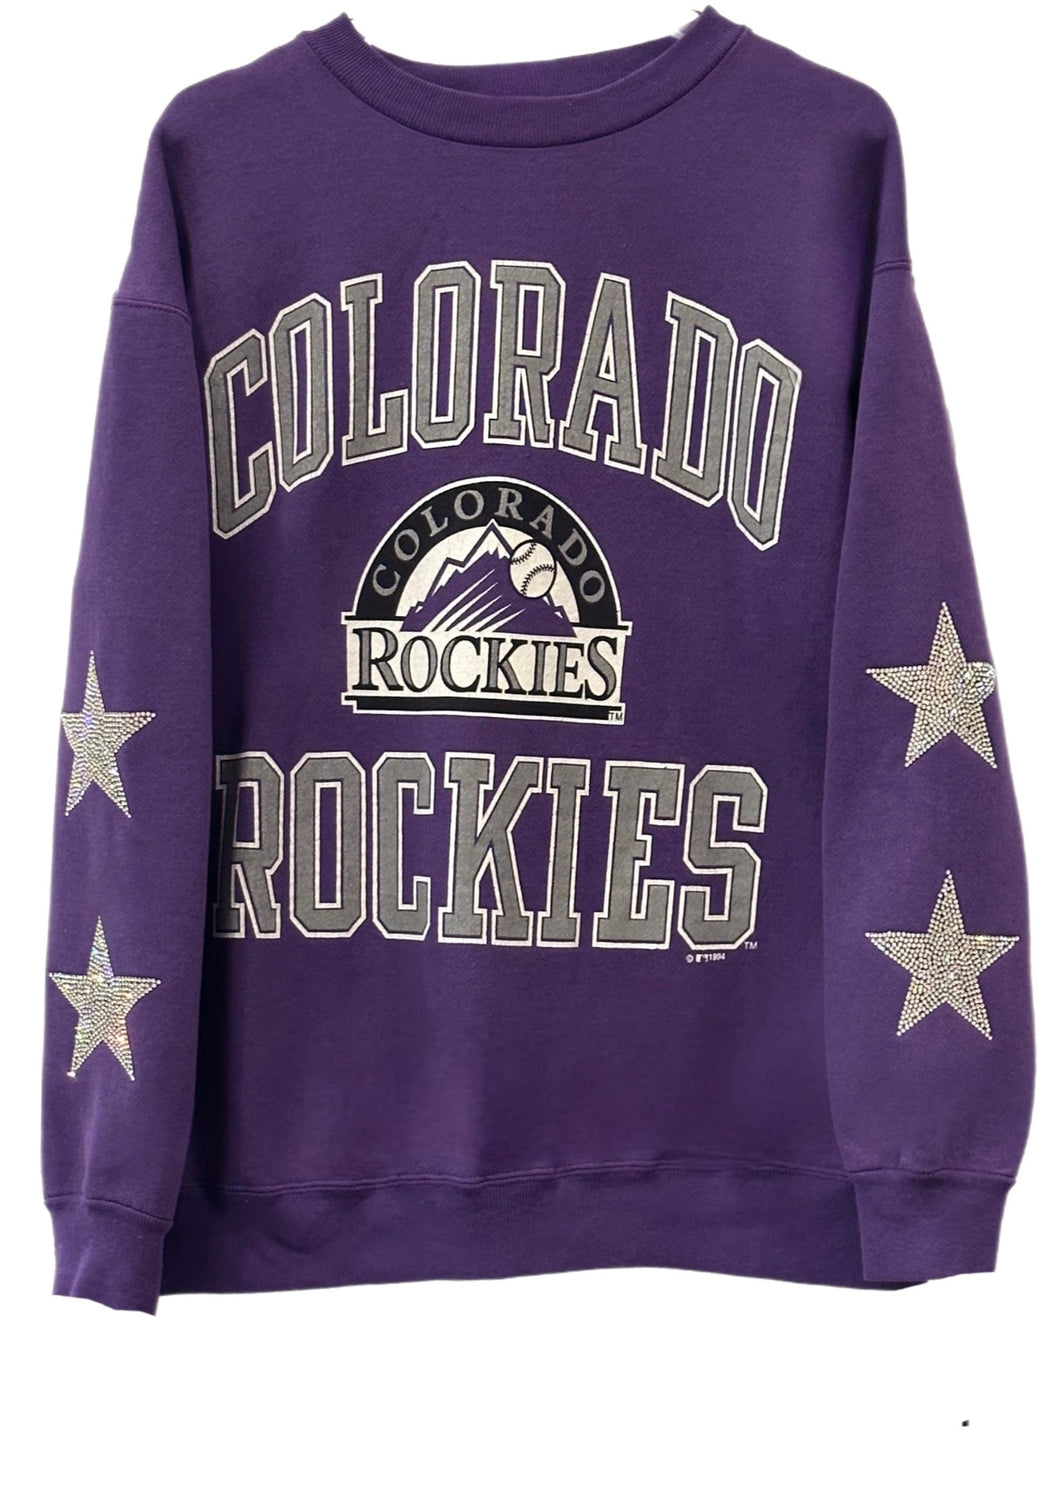 Colorado Rockies, MLB One of a KIND Vintage Sweatshirt with Crystal Star Design